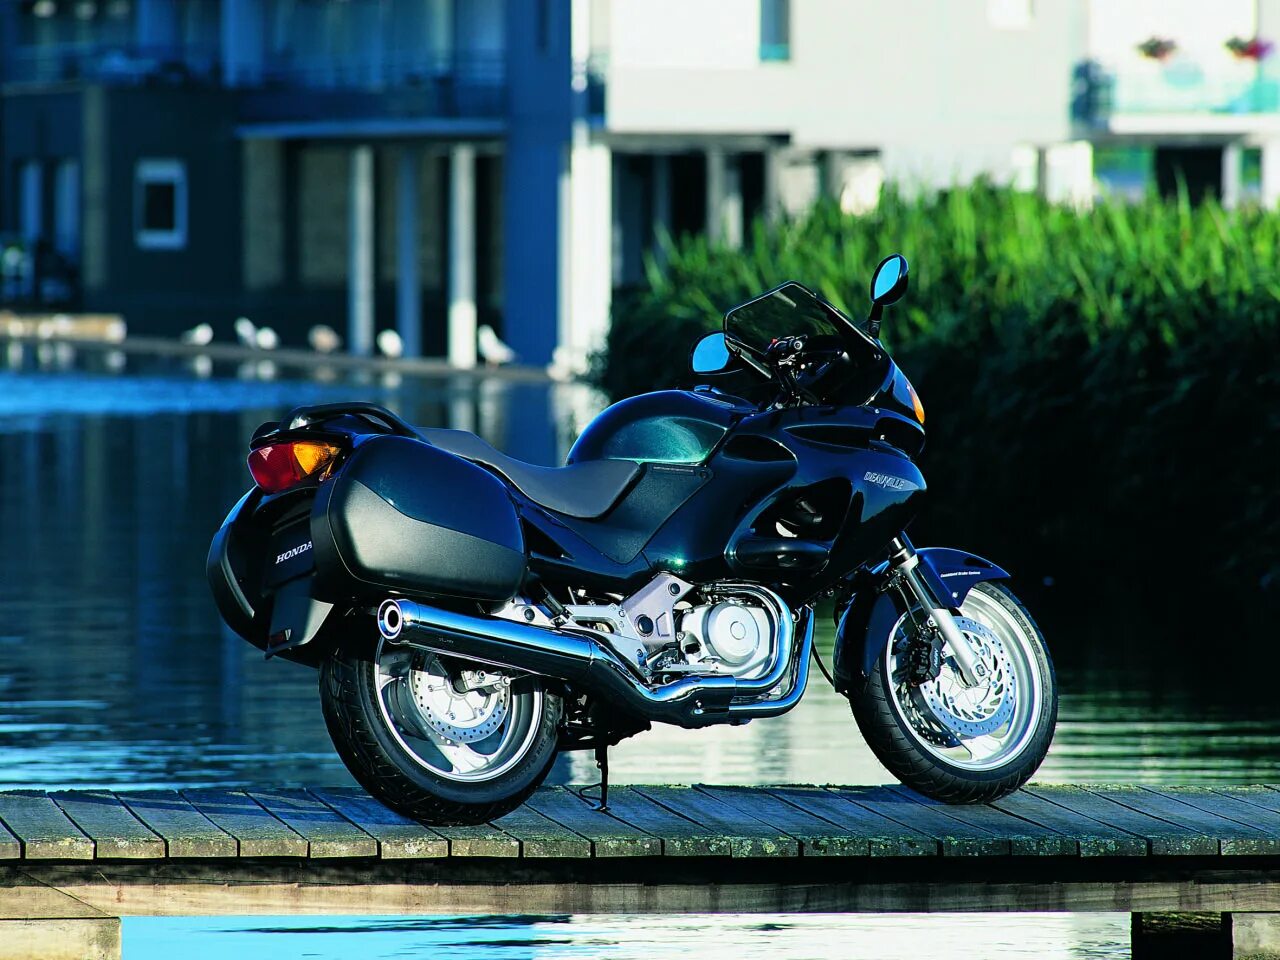 Honda nt650v. Honda NT 650. Хонда Deauville 650. Мотоцикл Honda nt650v Deauville.